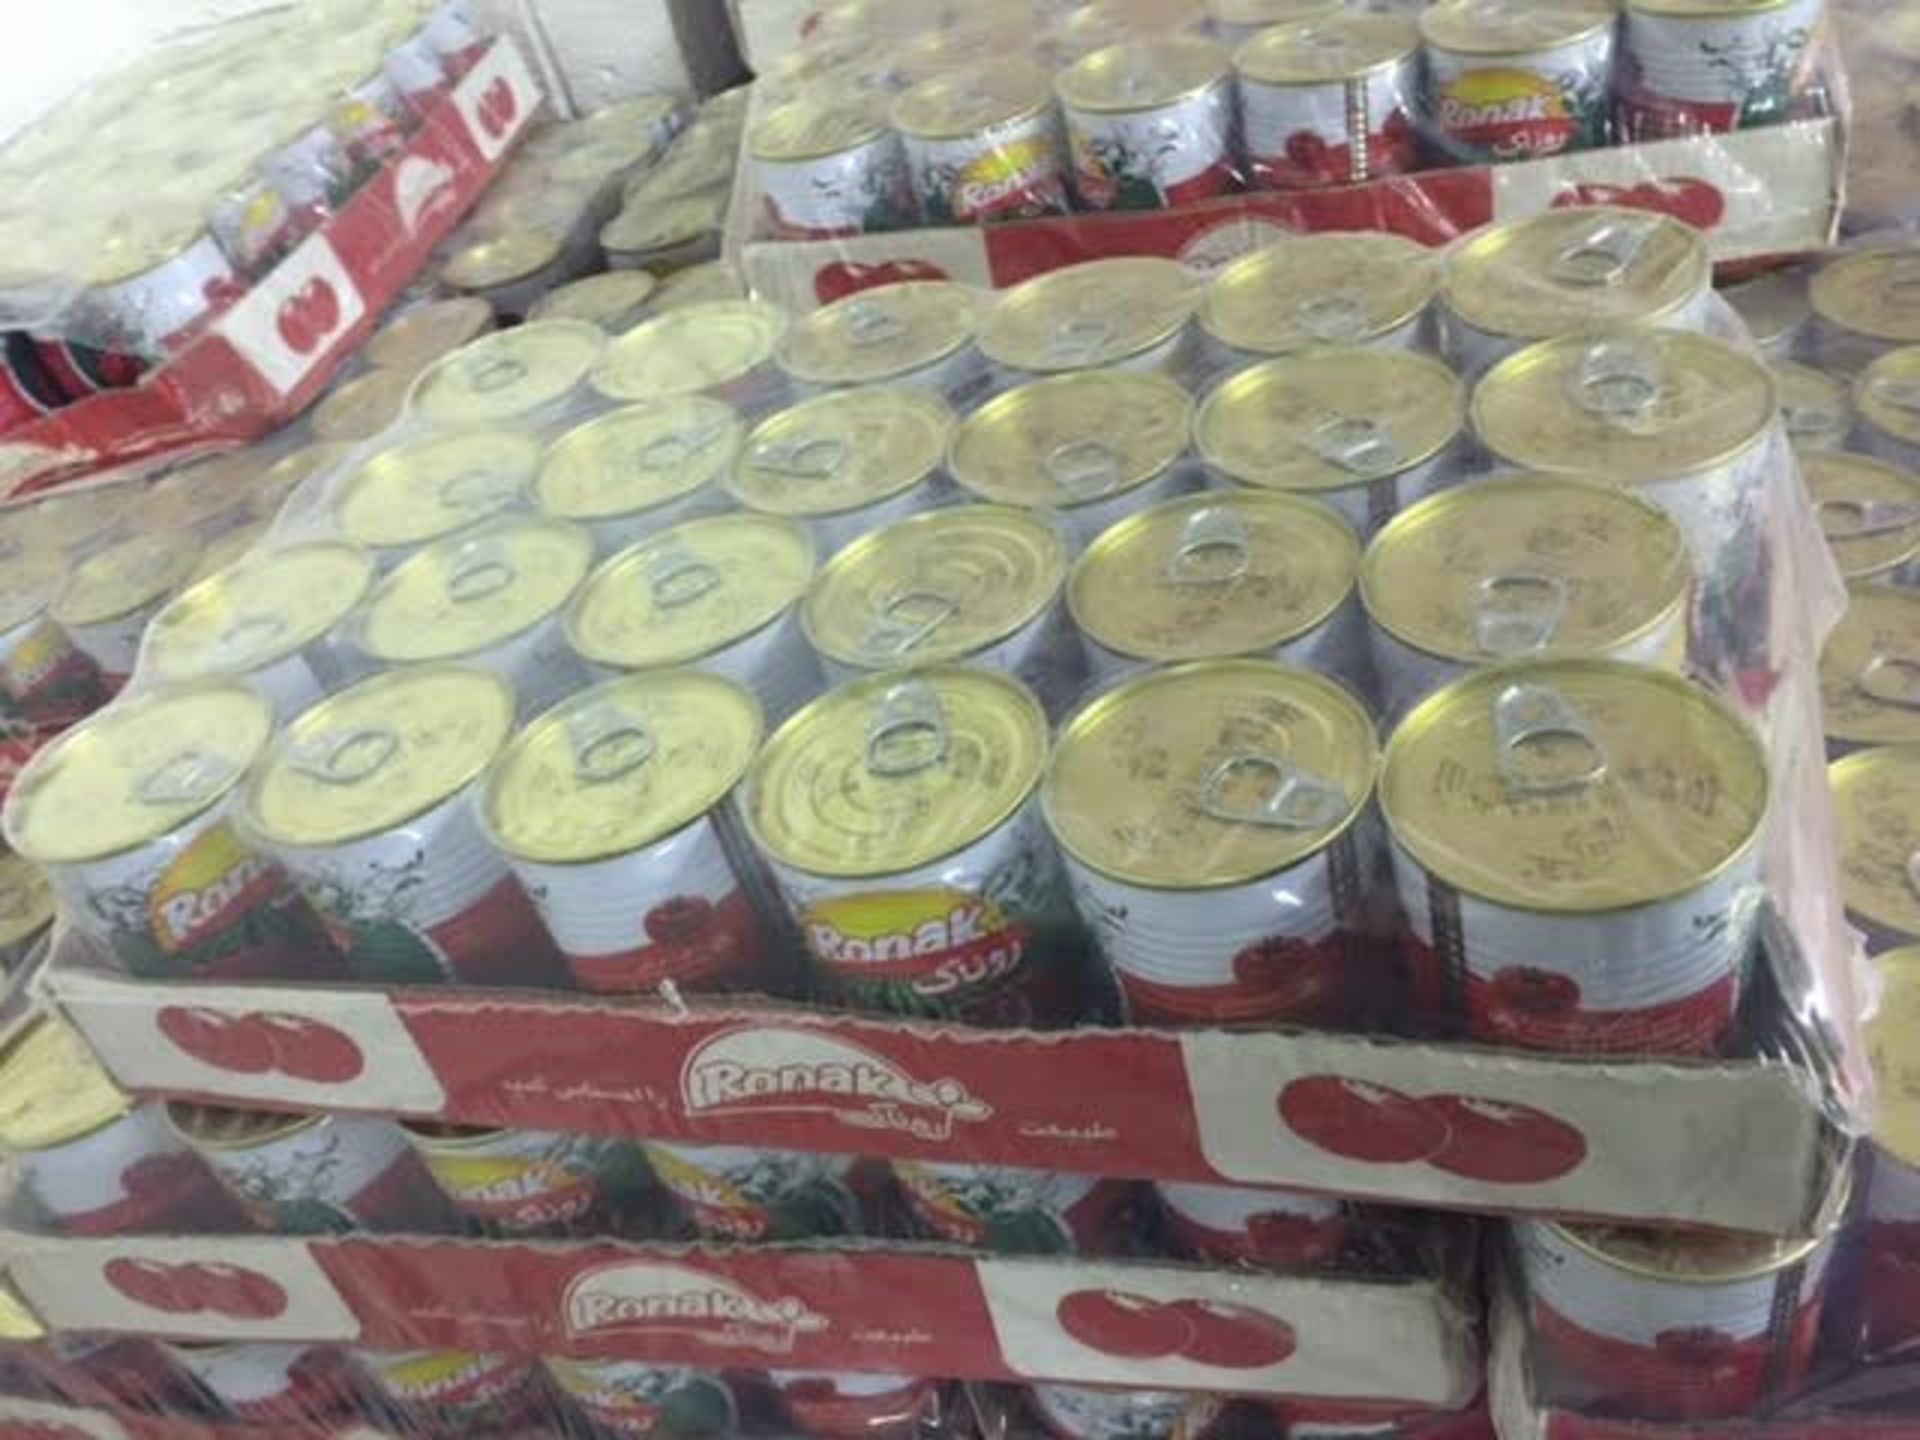 2,400 x Tins of Ronak Tomato Paste - Includes 100 x Cases of 24 x Tins of 400gr Tomato Paste - - Image 4 of 4